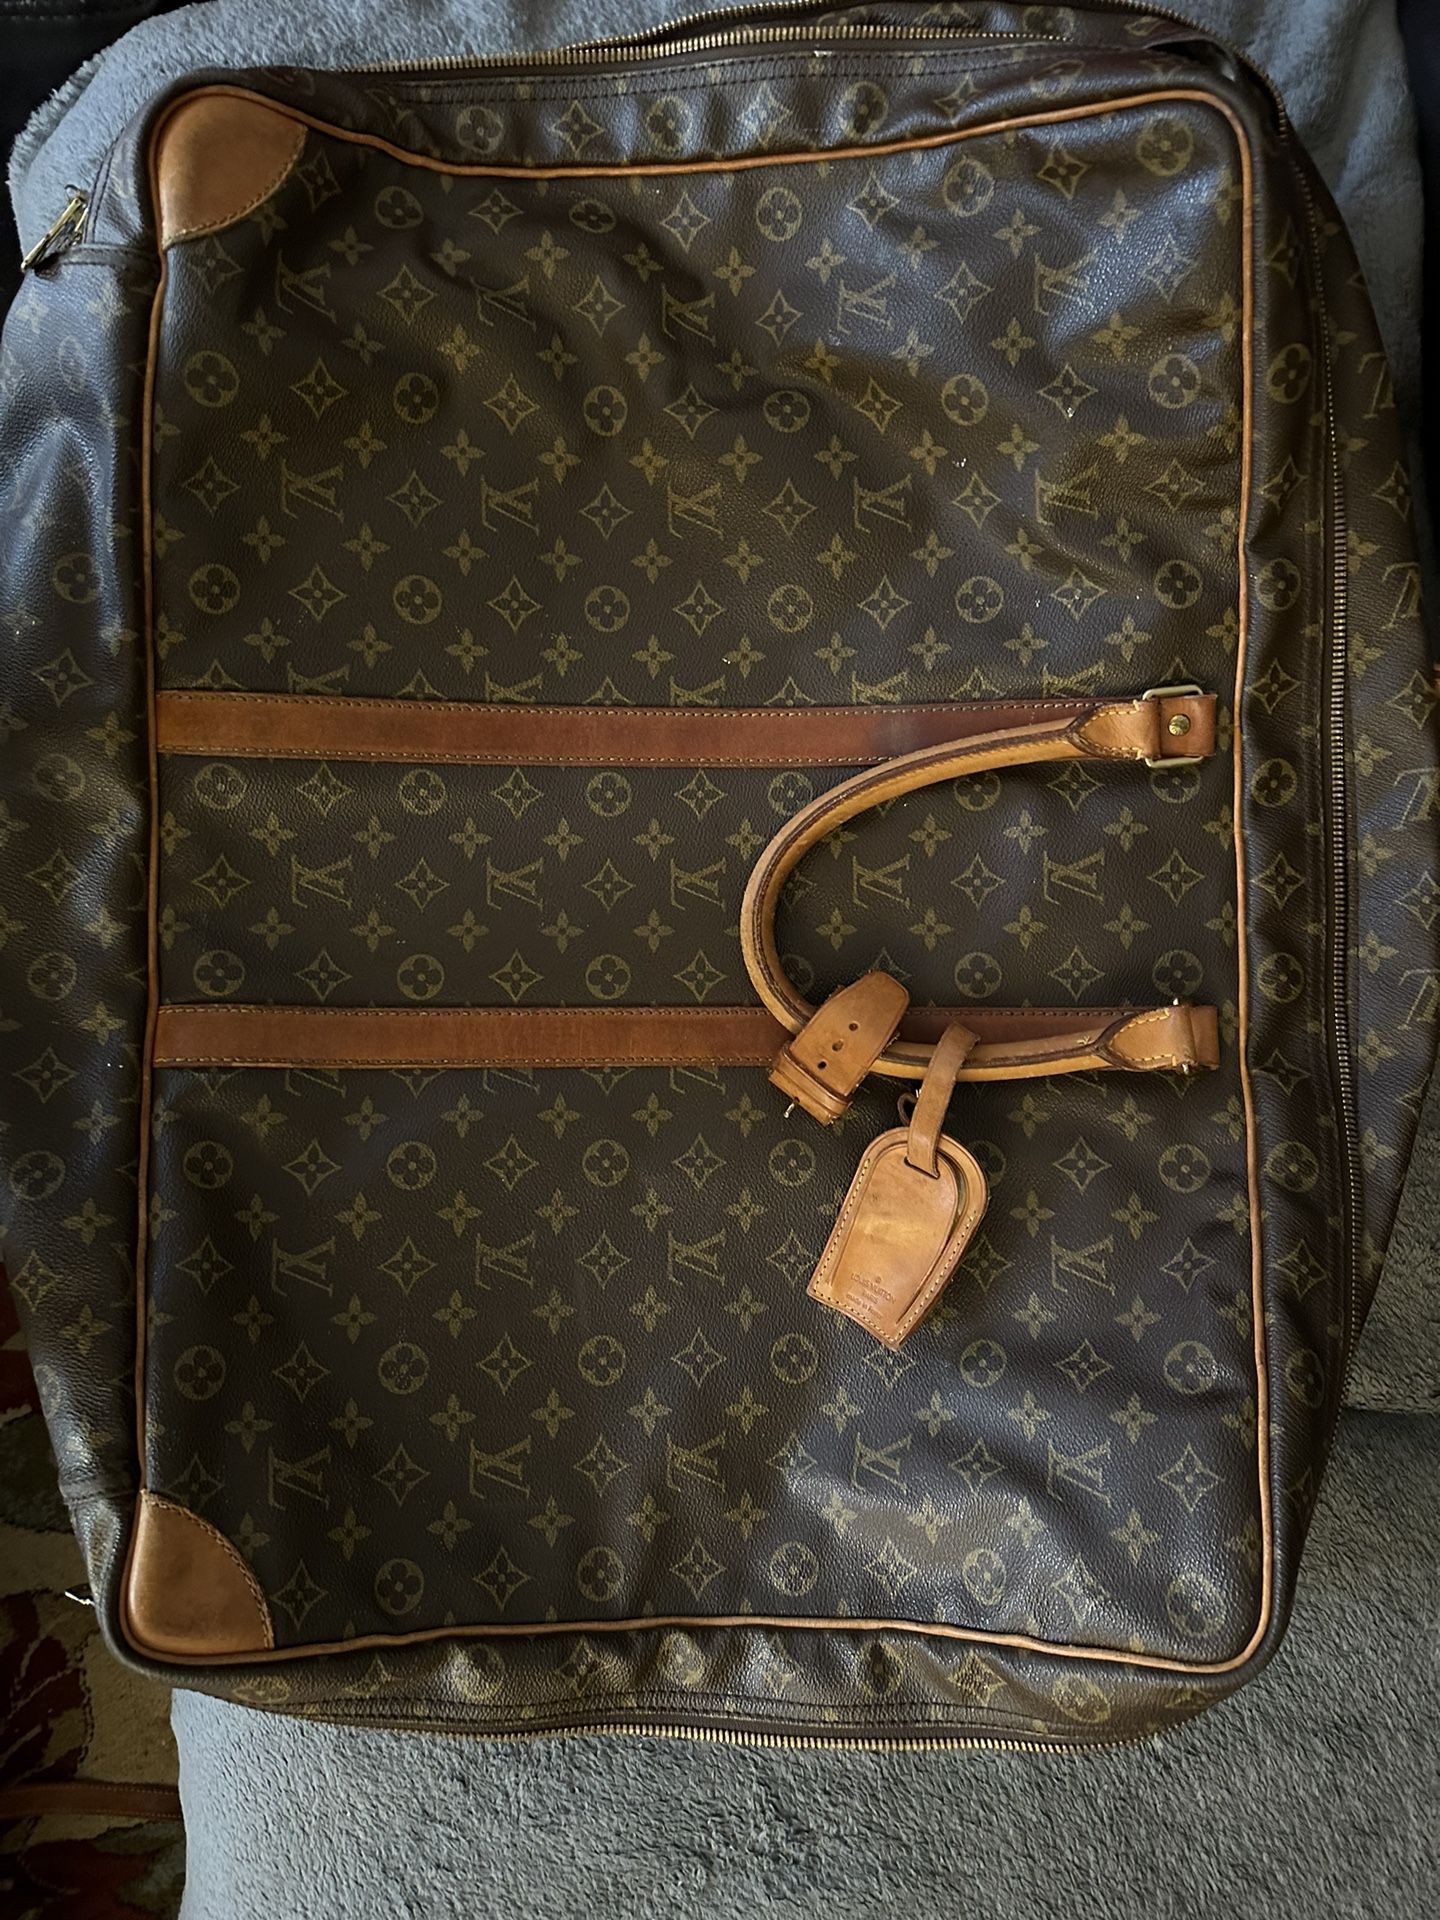 AUTHENTIC Louis Vuitton Luggage - Bag